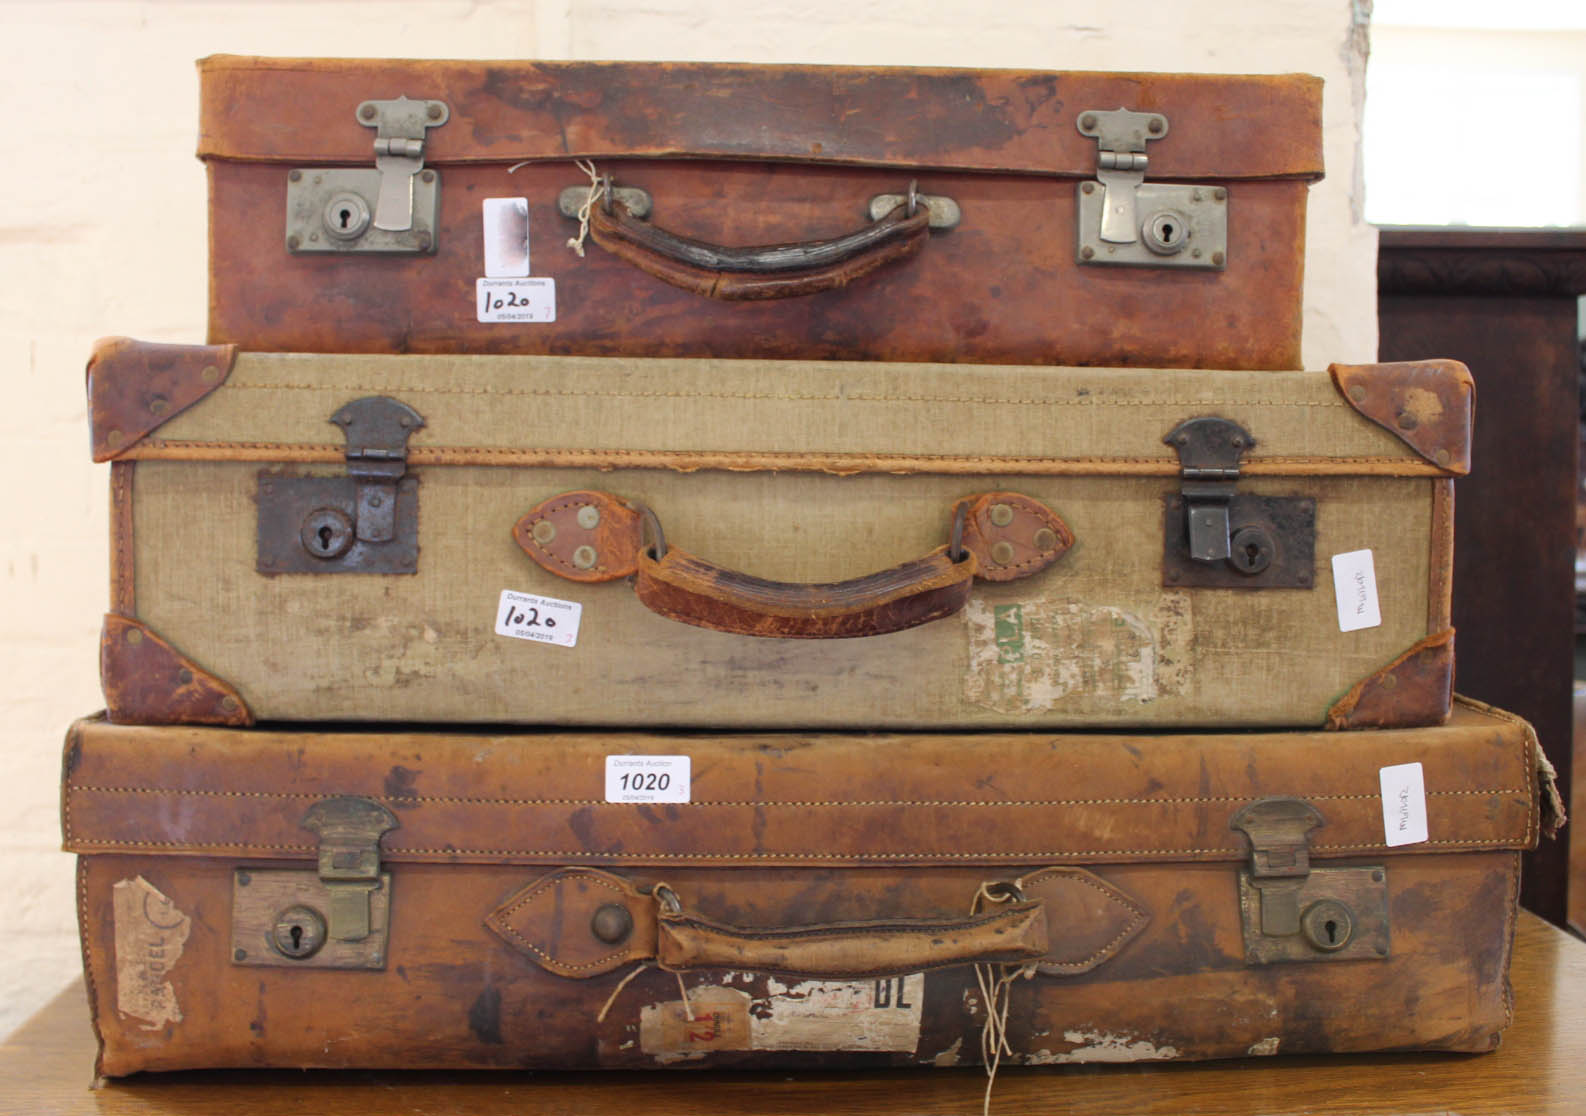 Three vintage suitcases of graduating sizes